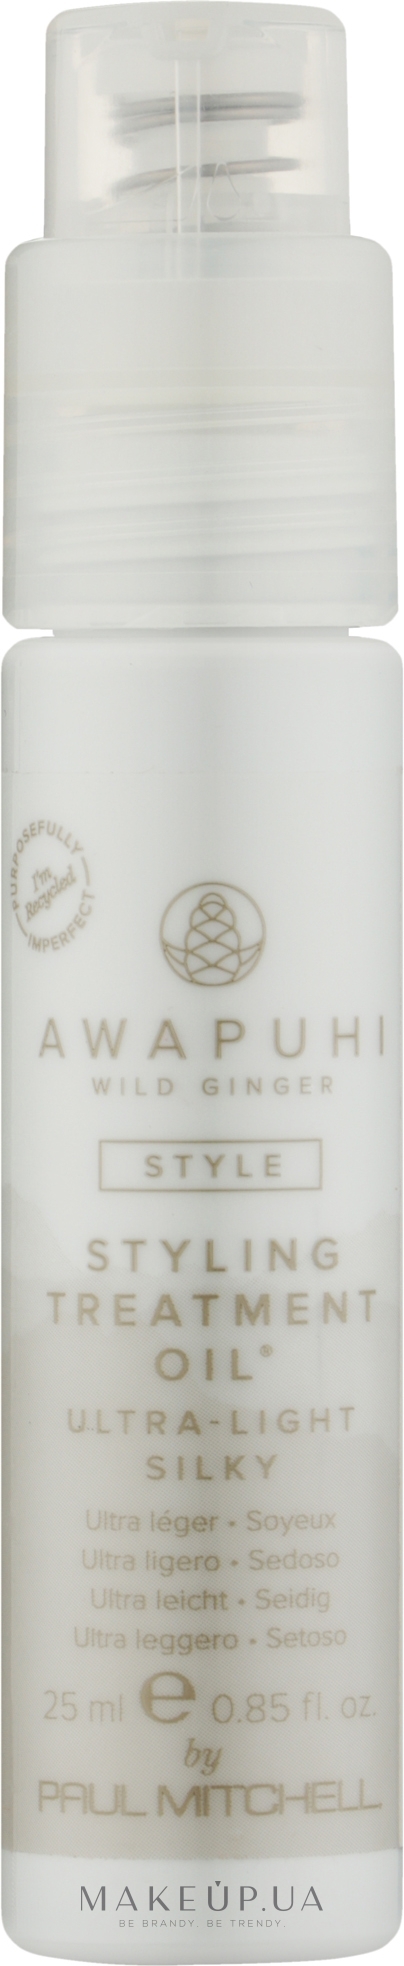 Масло для укладки и ухода за волосами - Paul Mitchell Awapuhi Wild Ginger Styling Treatment Oil — фото 25ml